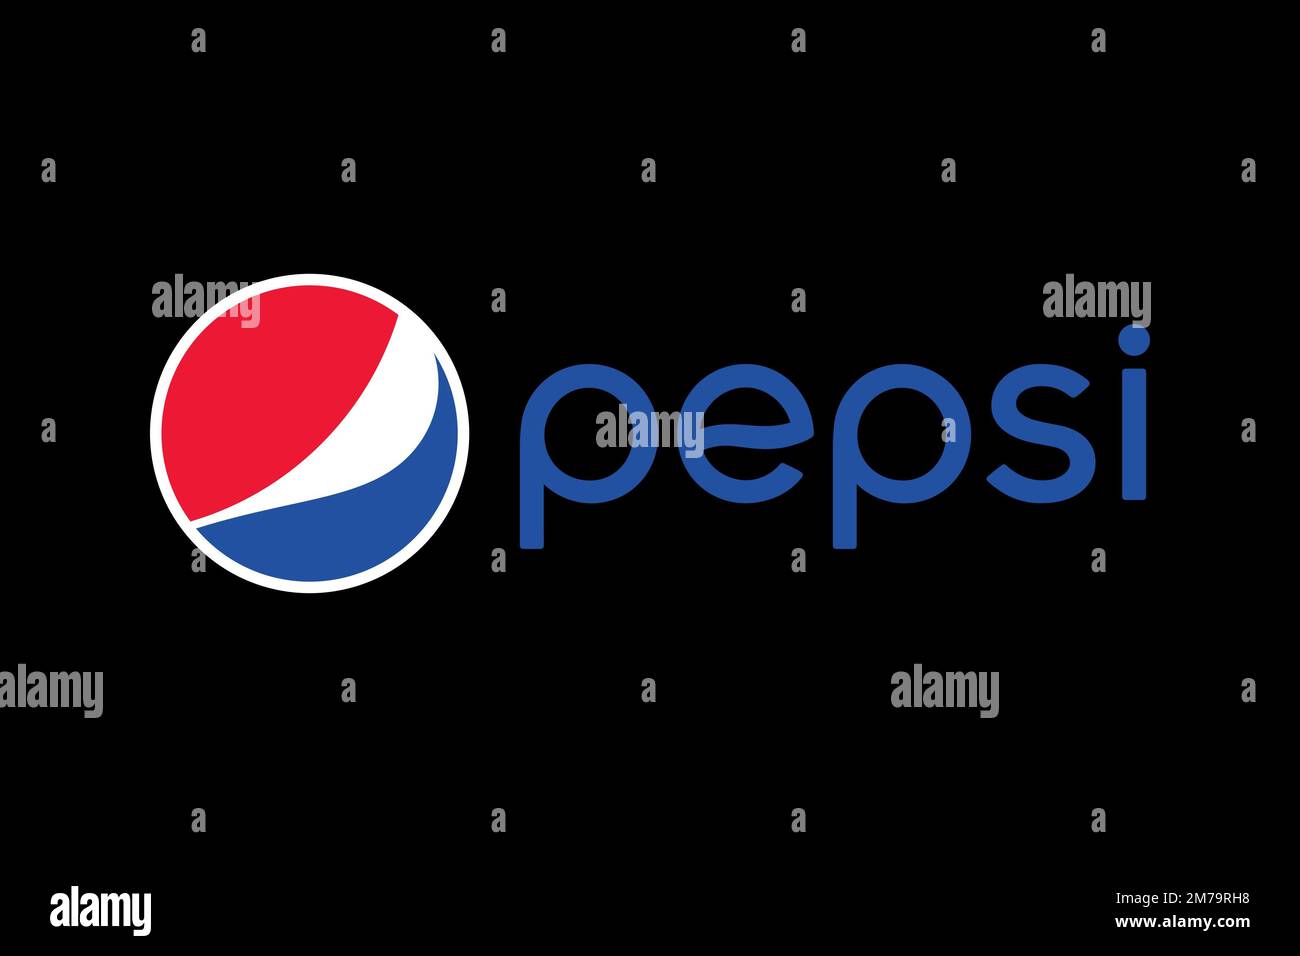 Pepsi, Logo, Black background Stock Photo - Alamy